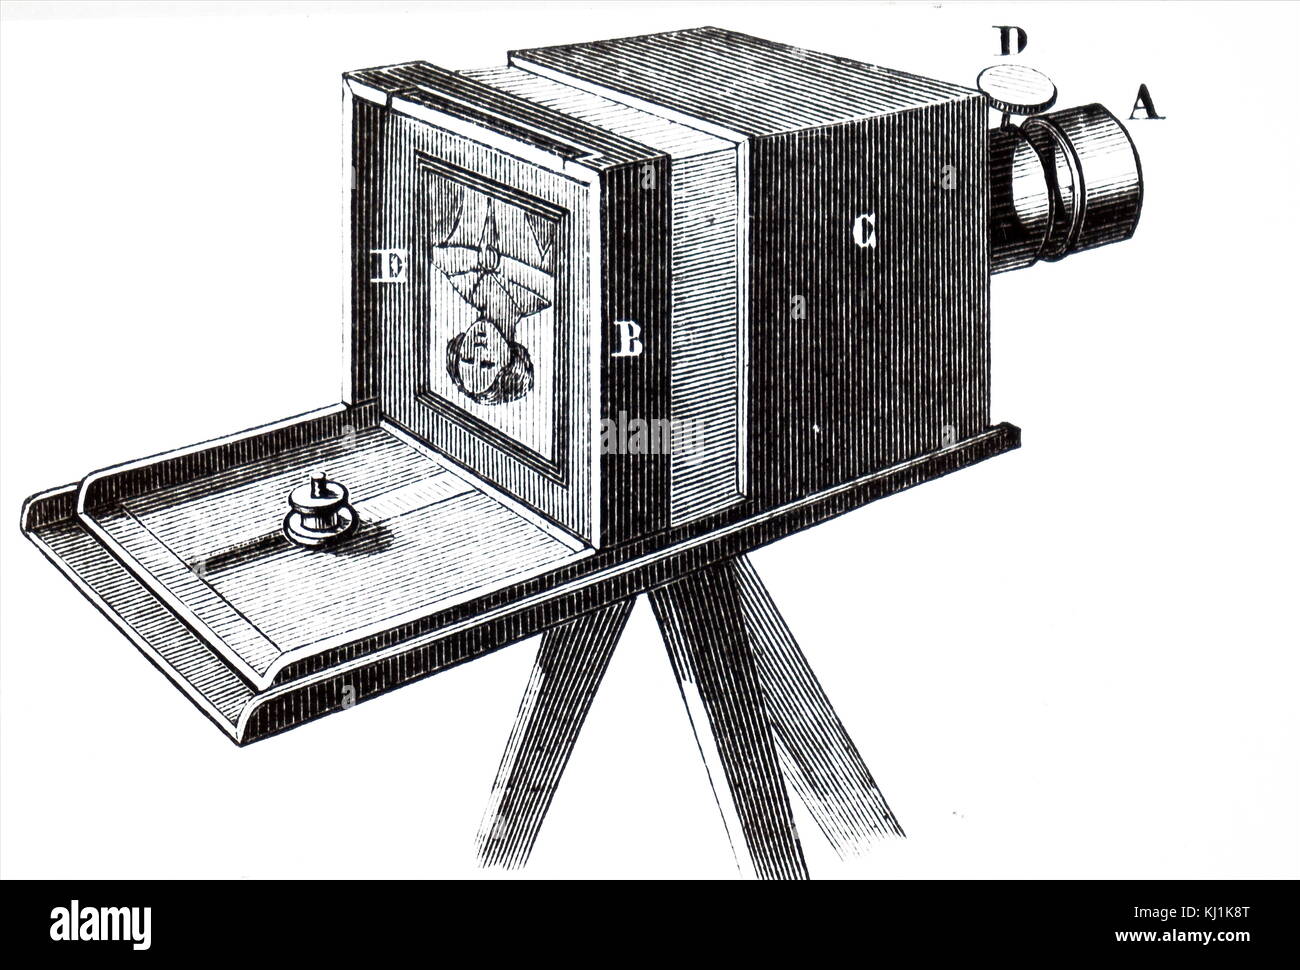 Conota camera. Луи Дагер первый фотоаппарат. Луи Дагер камера обскура. Иоганн Кеплер камера обскура. Первый фотоаппарат камера-обскура.